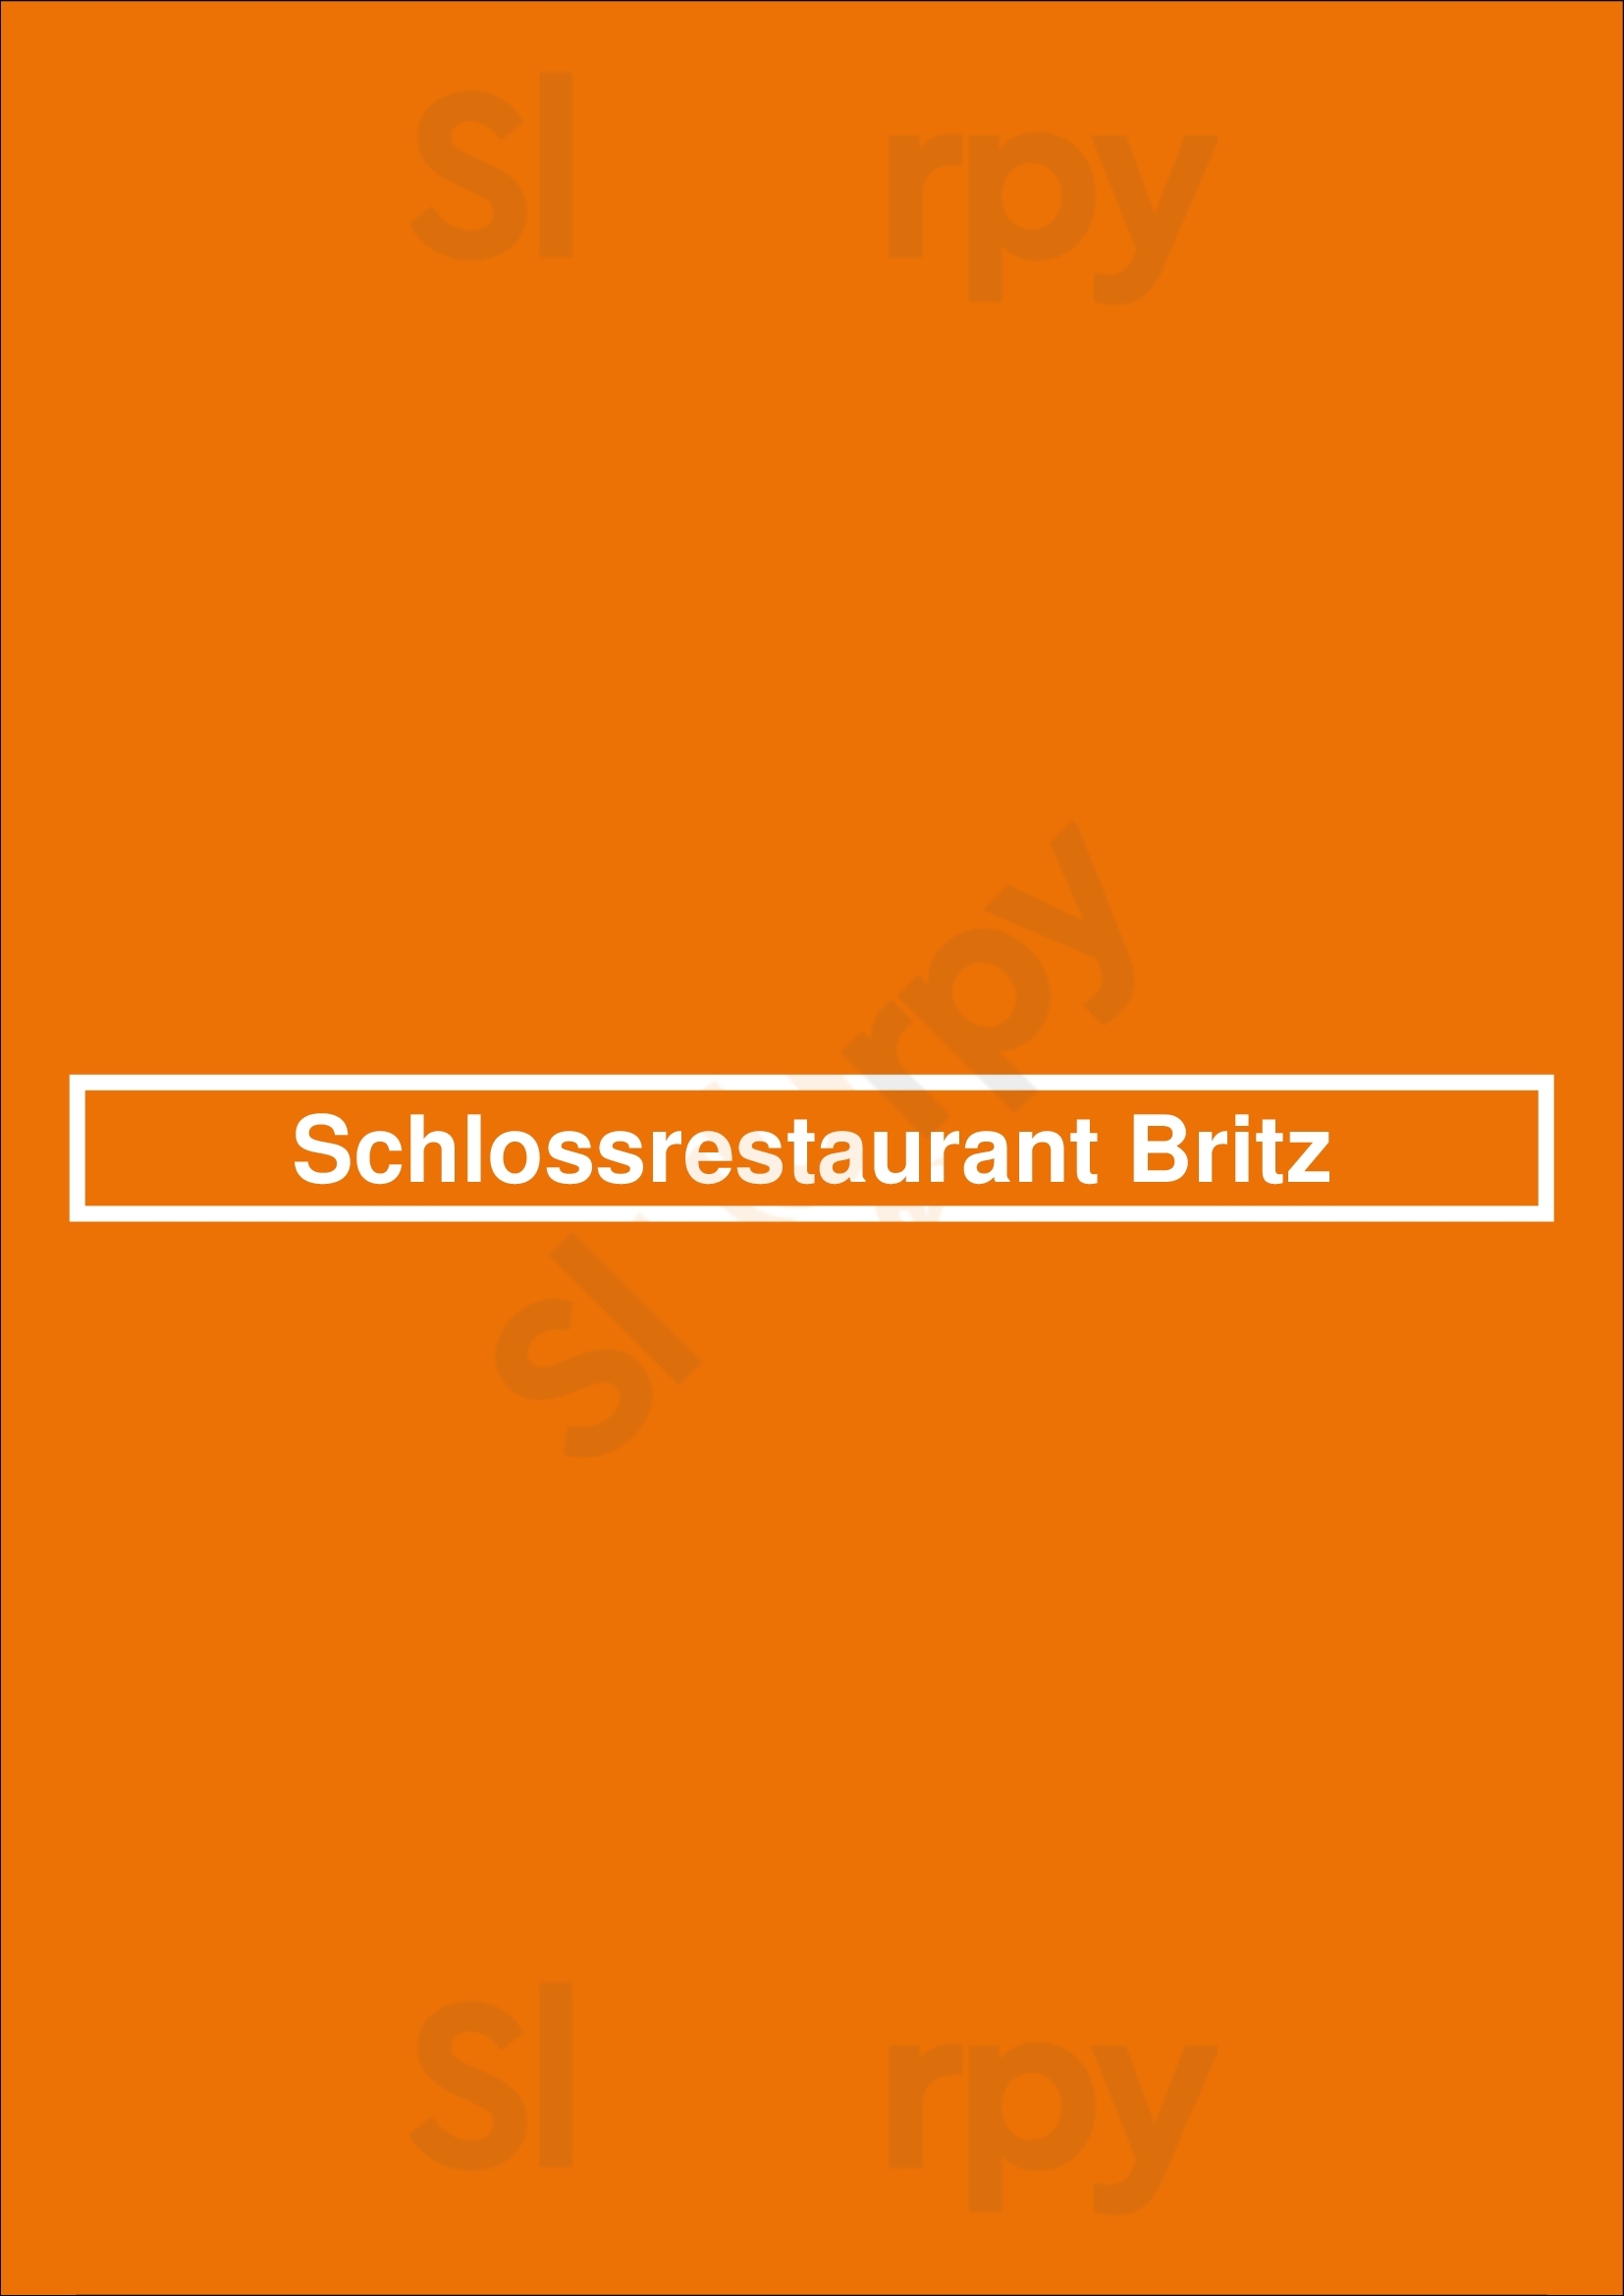 Schlossrestaurant Britz Berlin Menu - 1